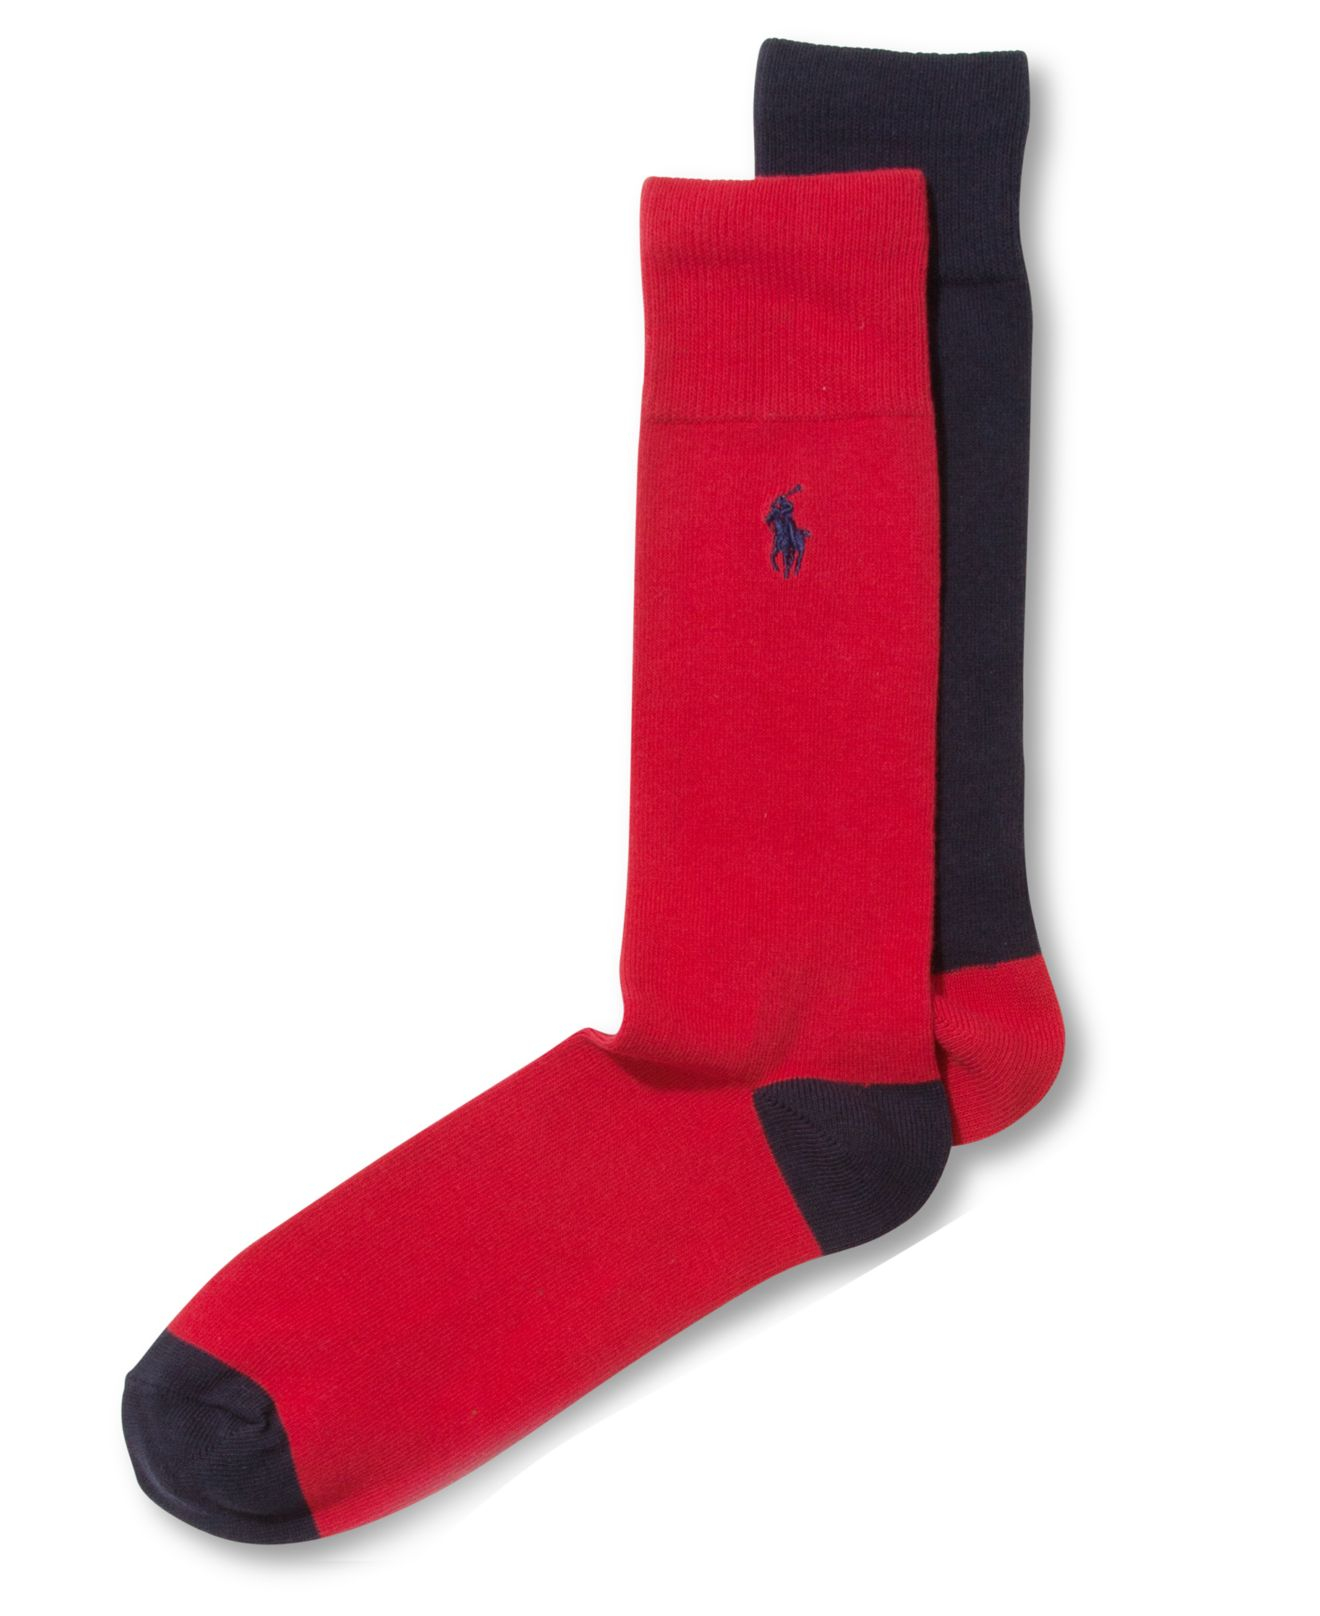 Polo Ralph Lauren Red Mens Contrast Heel Dress Socks 2 Pack Product 1 17691635 0 927874042 Normal 